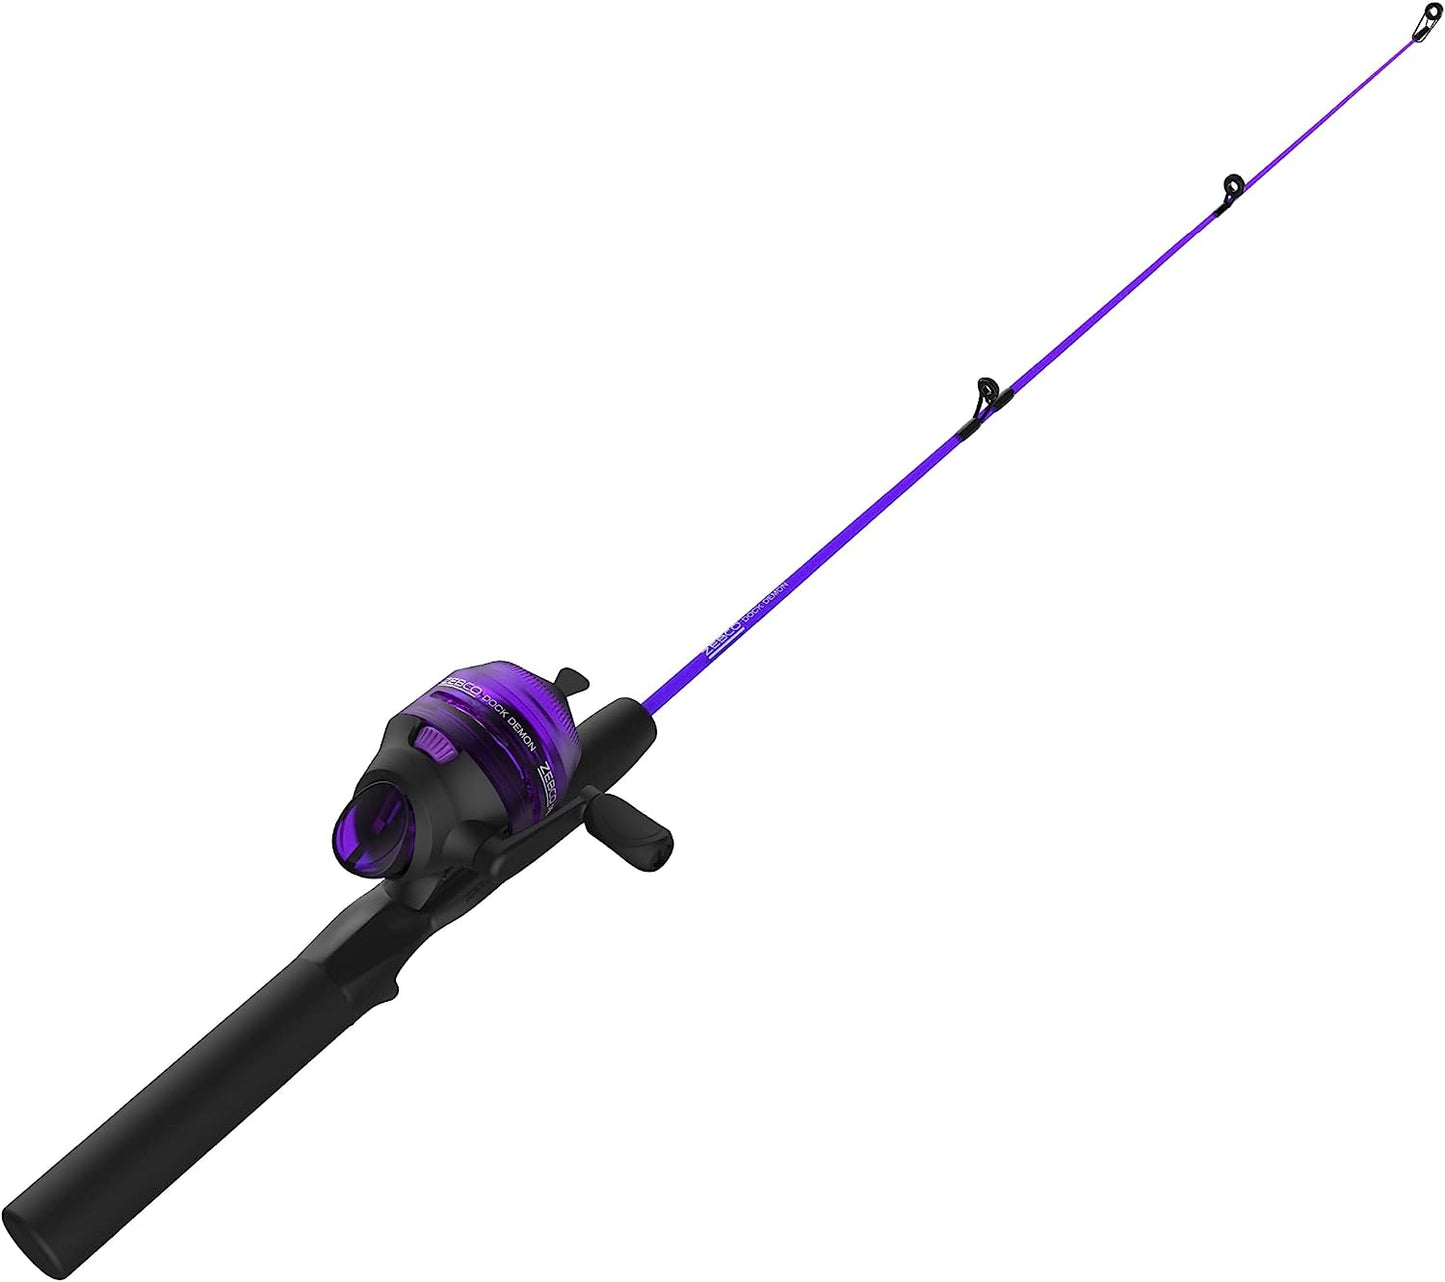 Dock Demon Spinning Reel or Spincast Reel and Fishing Rod Combo, 30-Inch Durable Fiberglass Rod, Quickset Anti-Reverse Fishing Reel